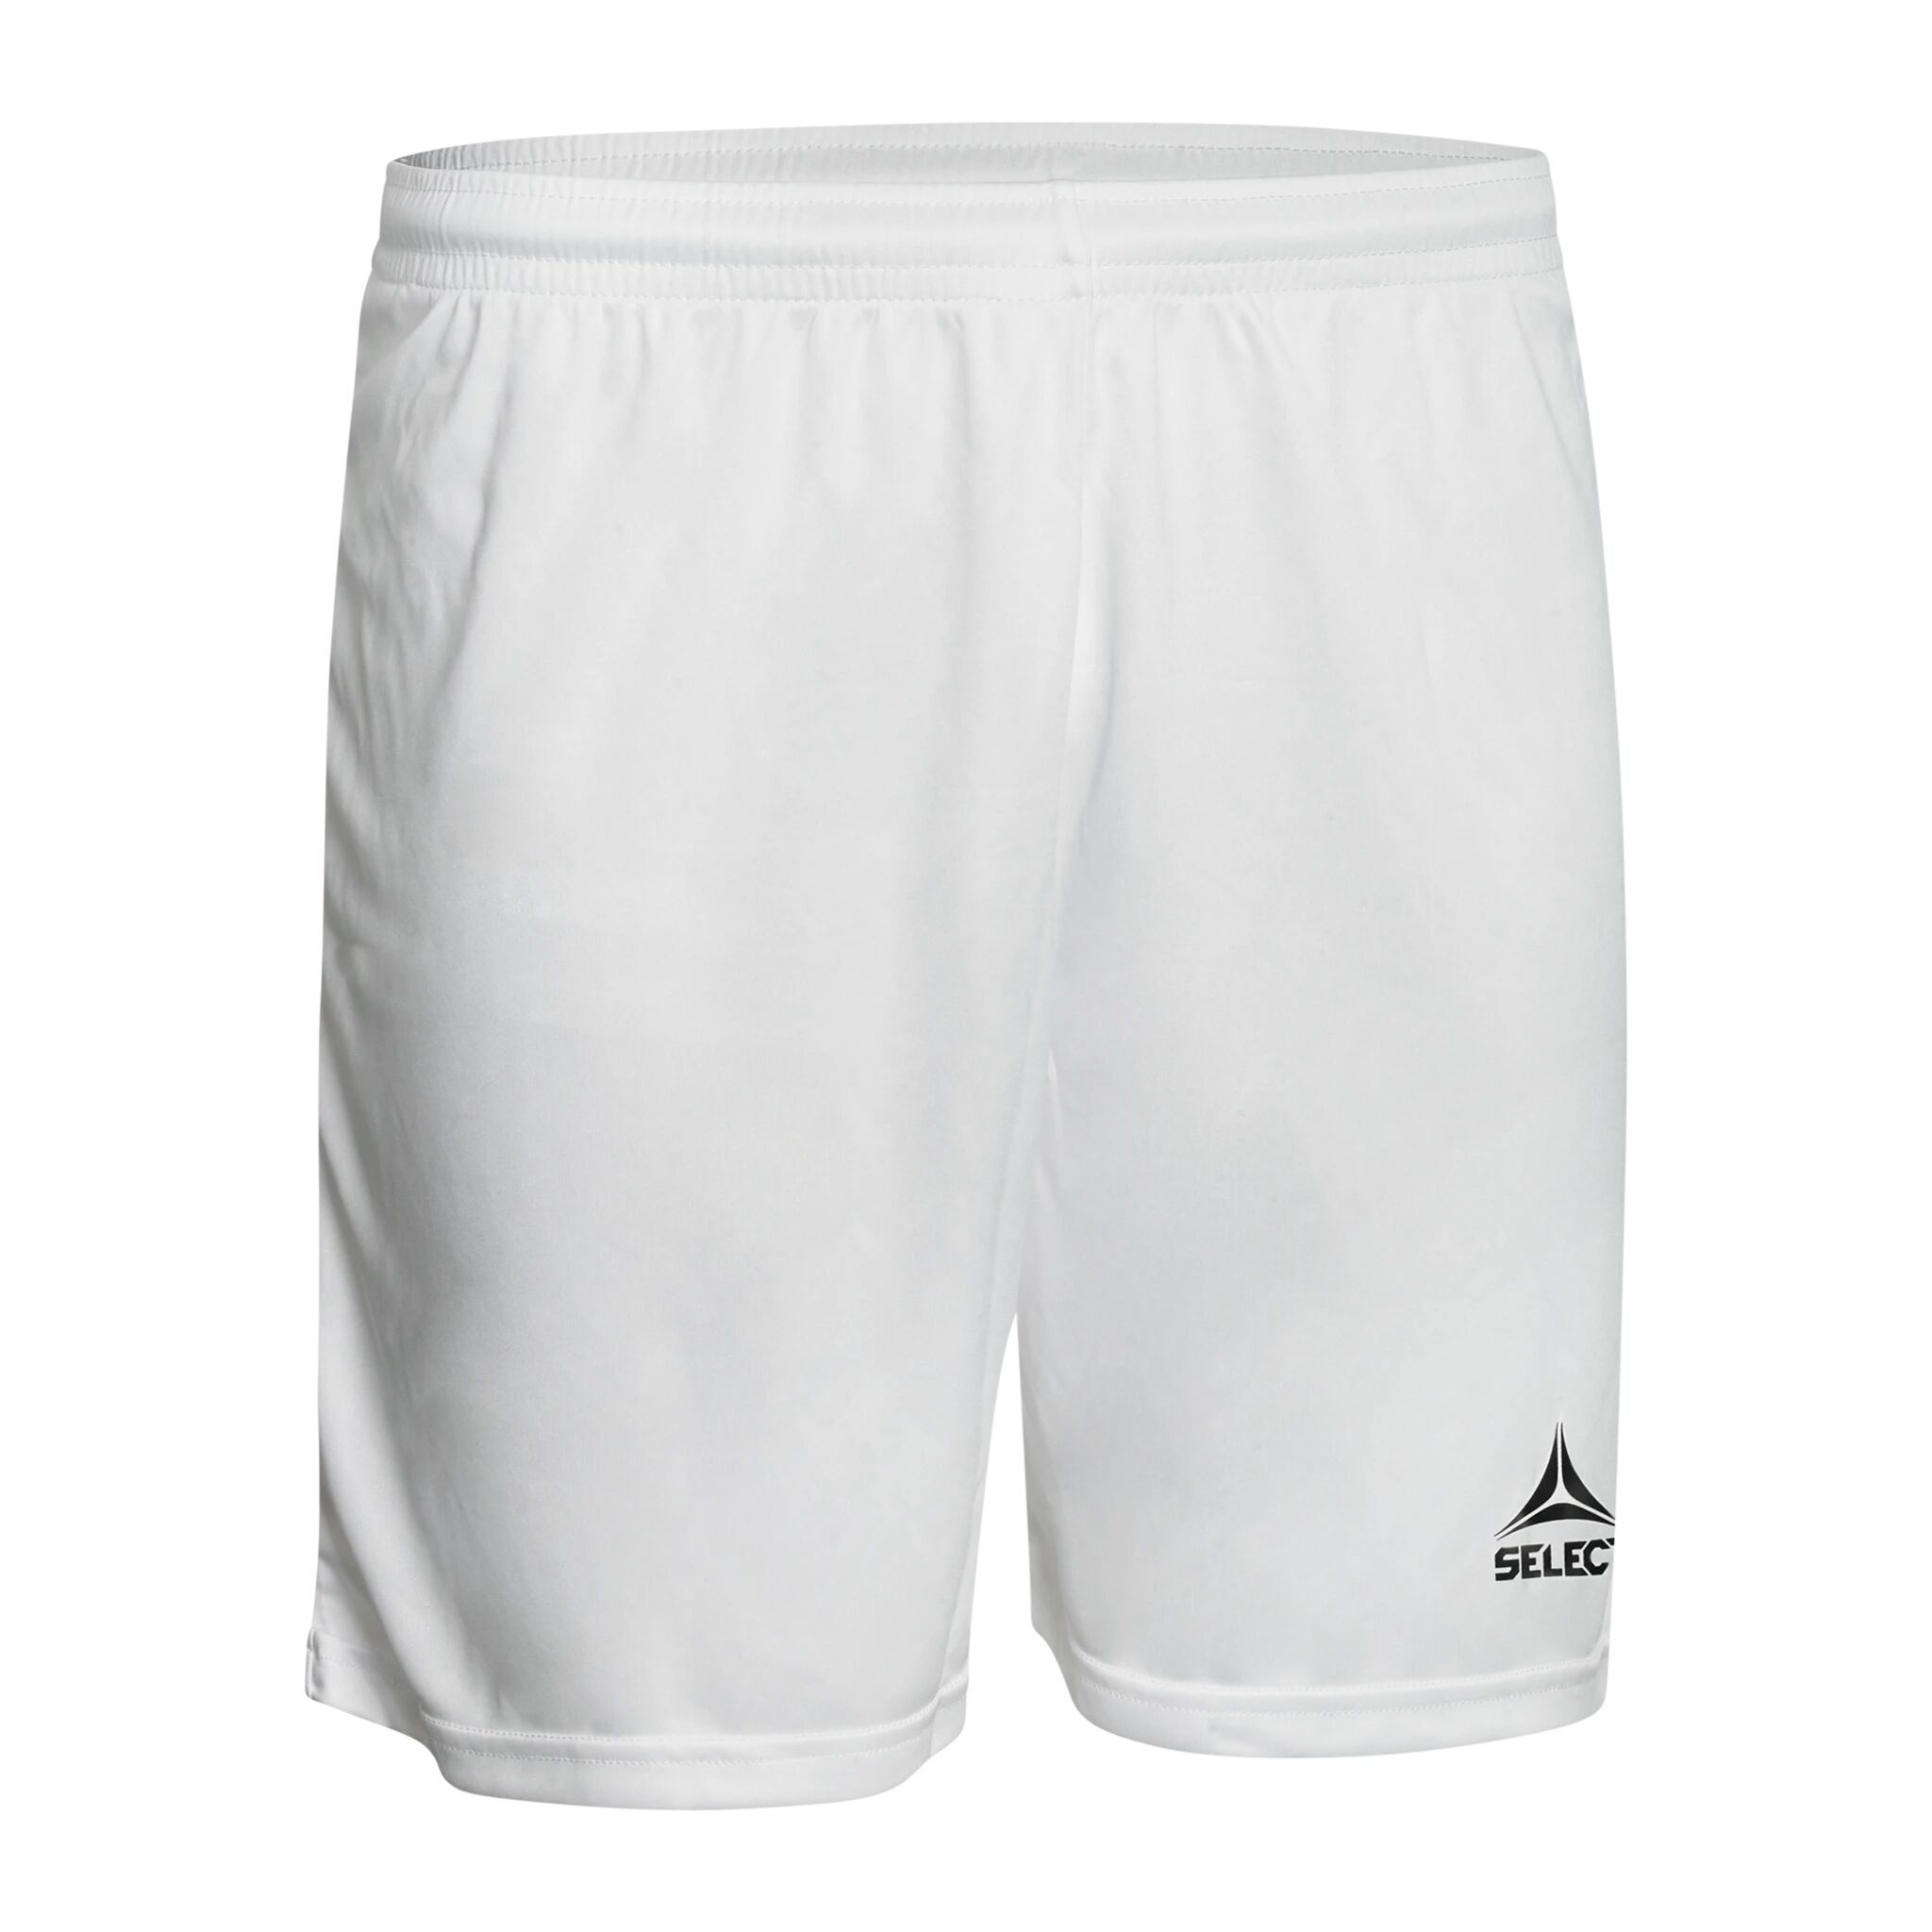 Select Player shorts Pisa, shorts senior 116 White